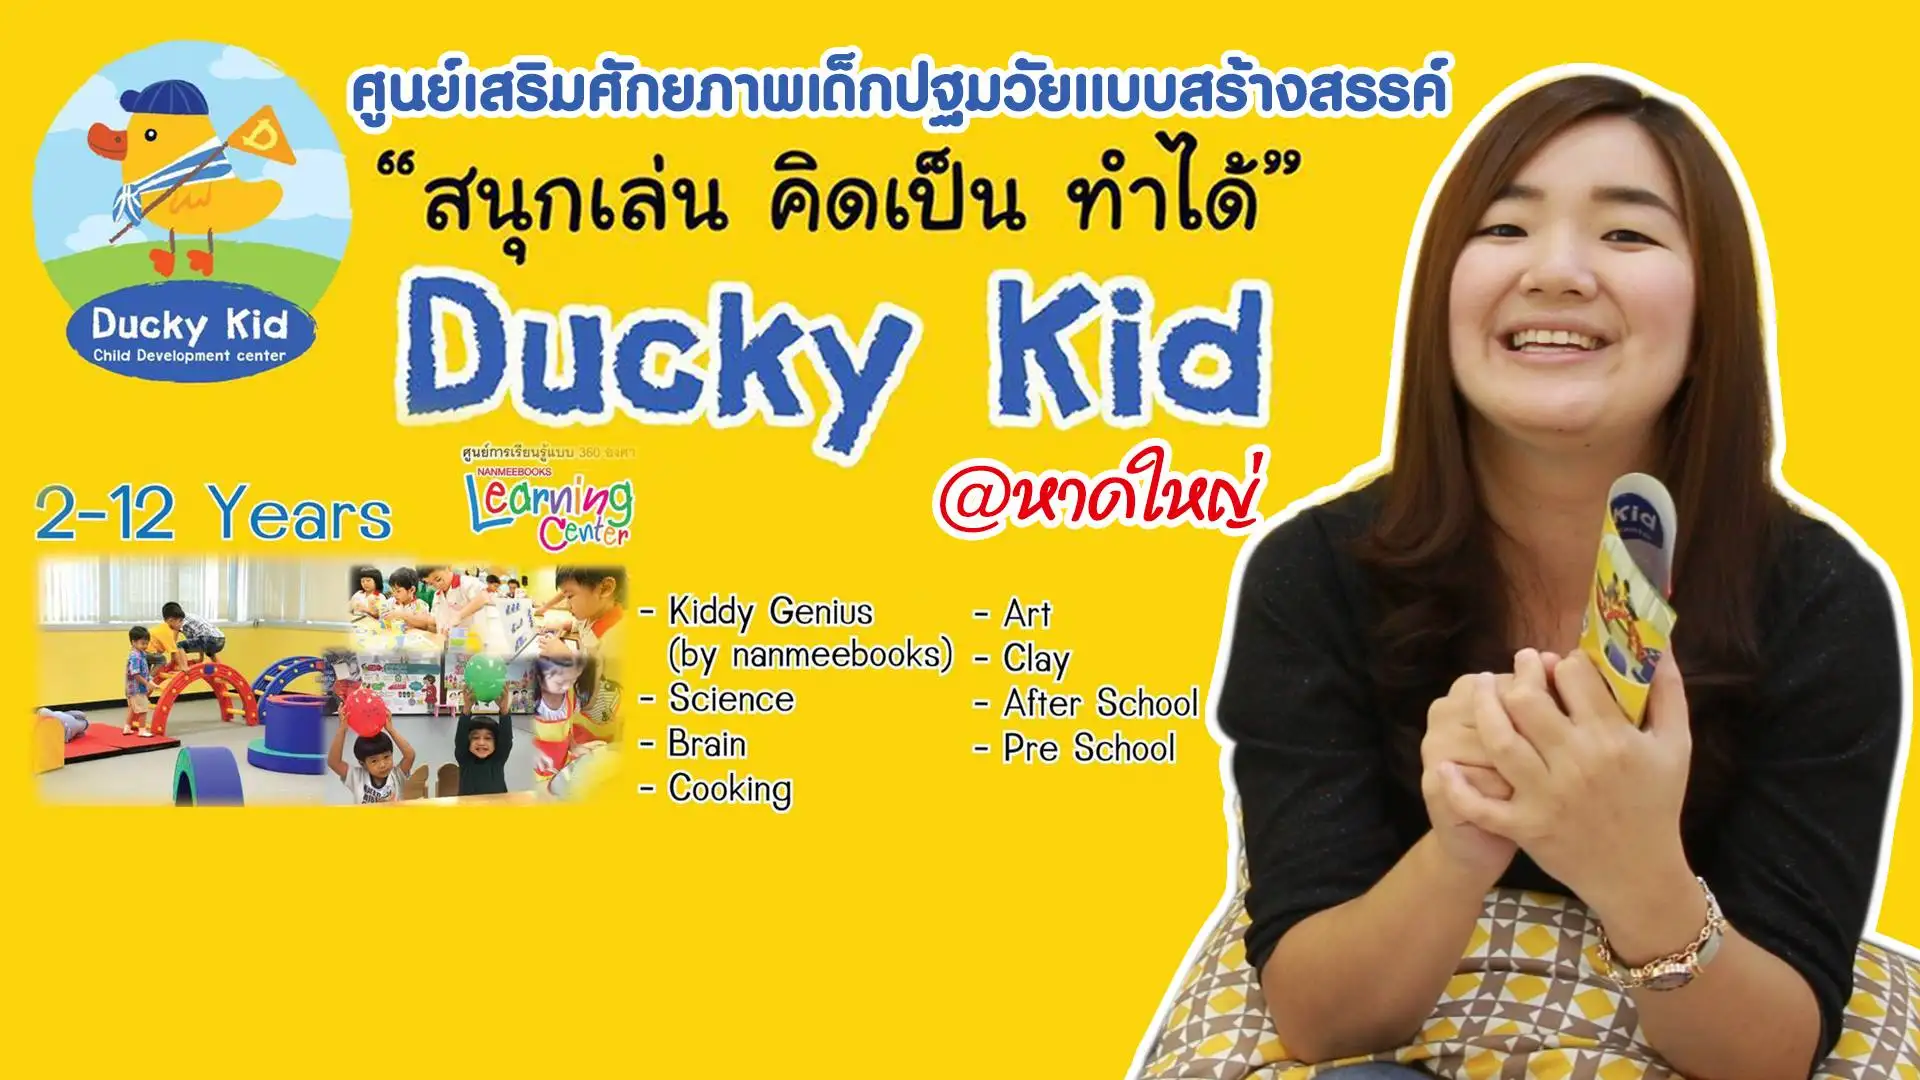 Ducky Kid ศูนย์เสริมศักยภาพเด็กปฐมวัยแบบสร้างสรรค์ สนุกเล่น คิดเป็น ทำได้